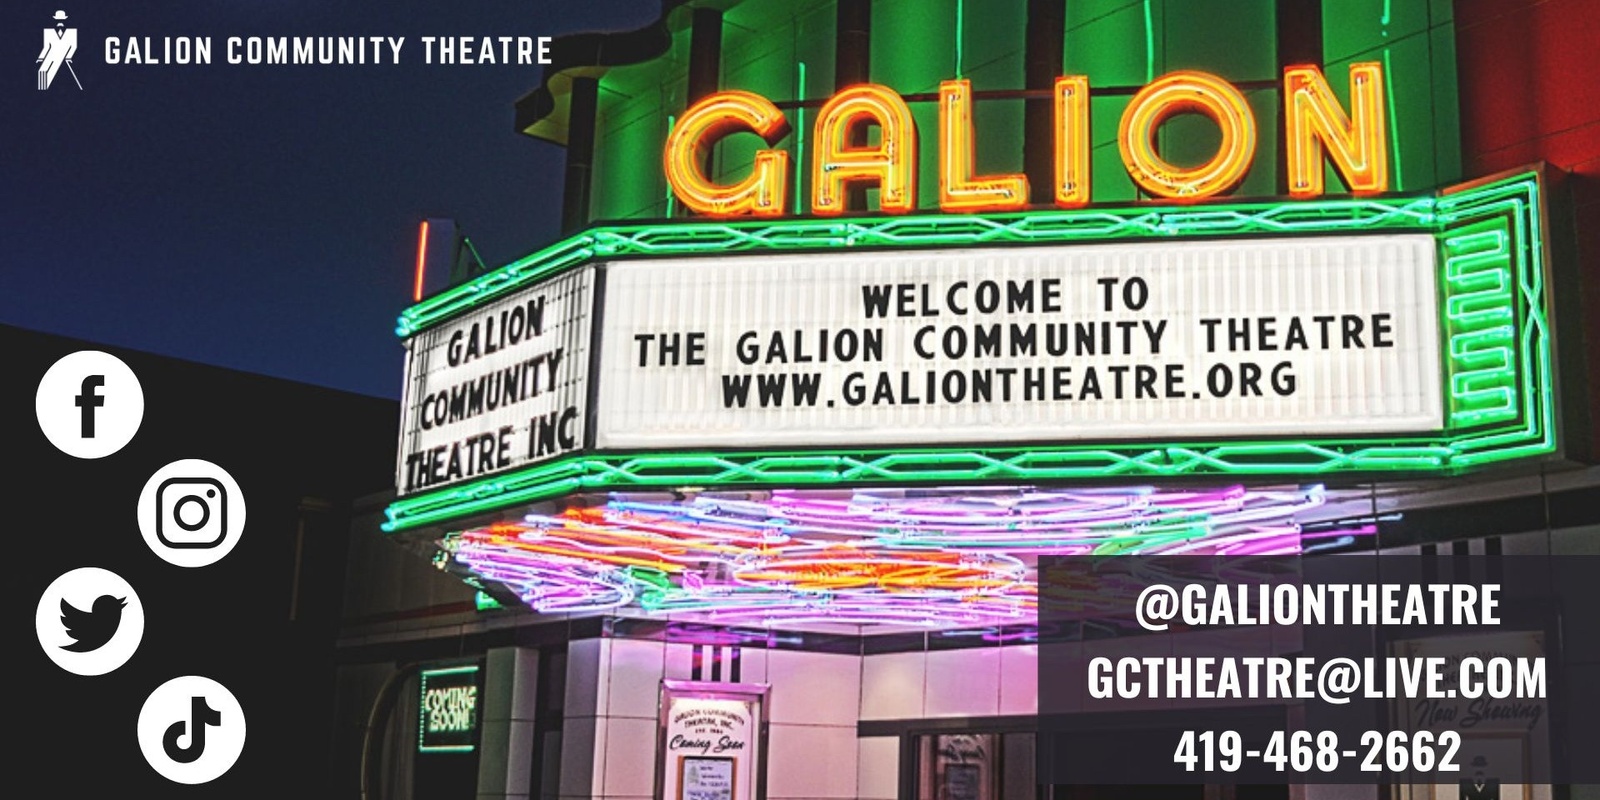 Galion Community Theatre's banner